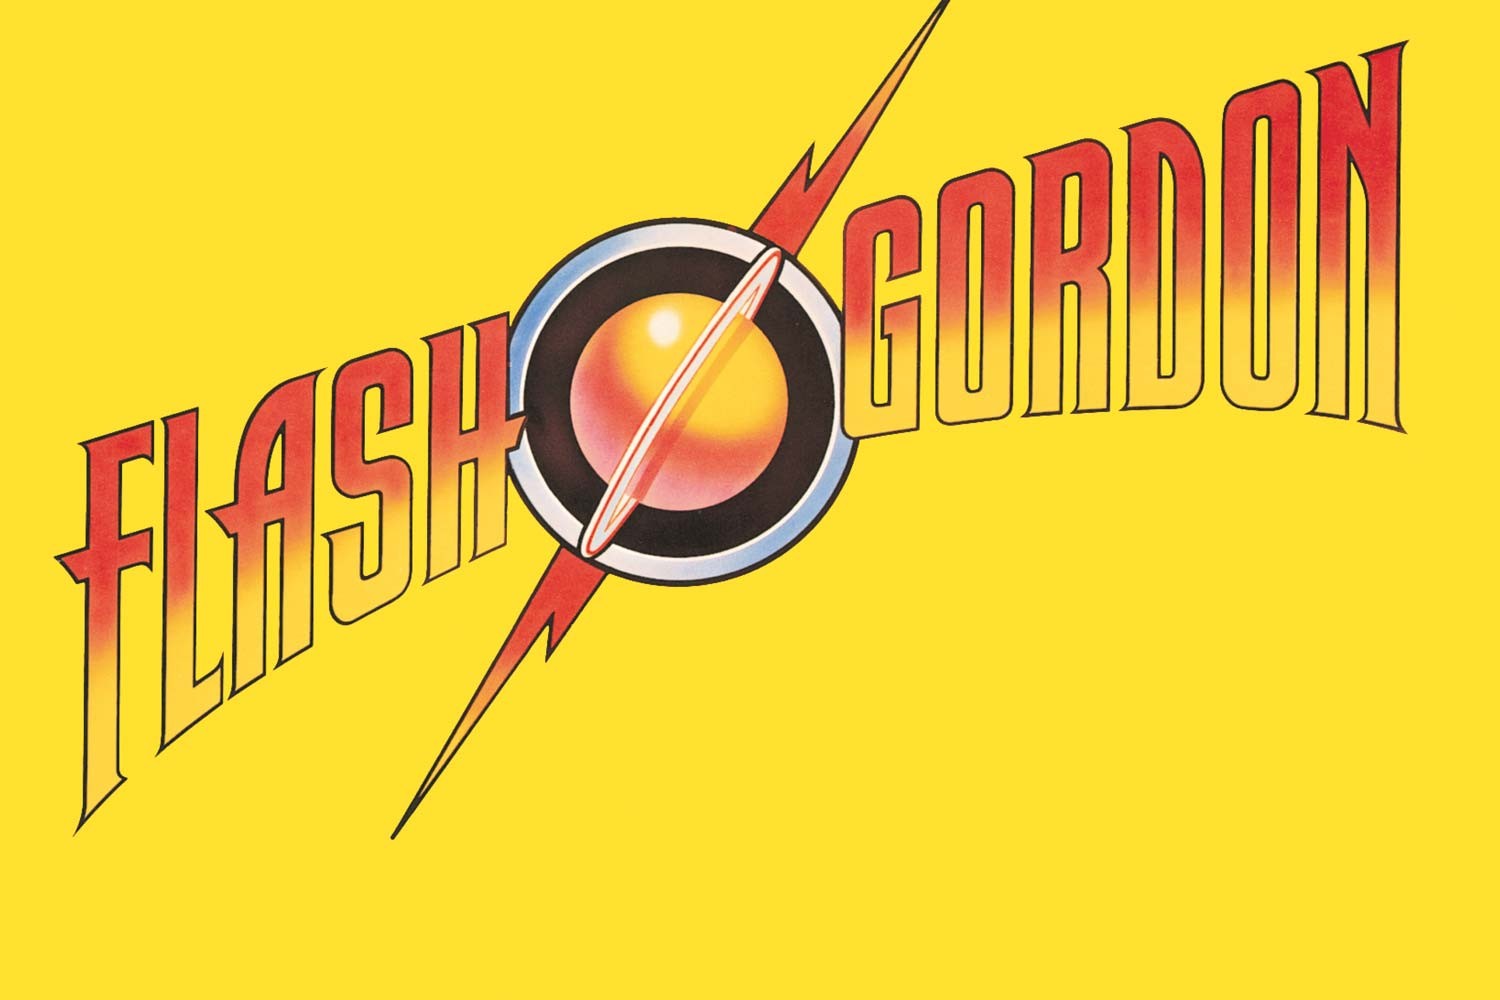 Flash Gordon HD wallpapers, Desktop wallpaper - most viewed